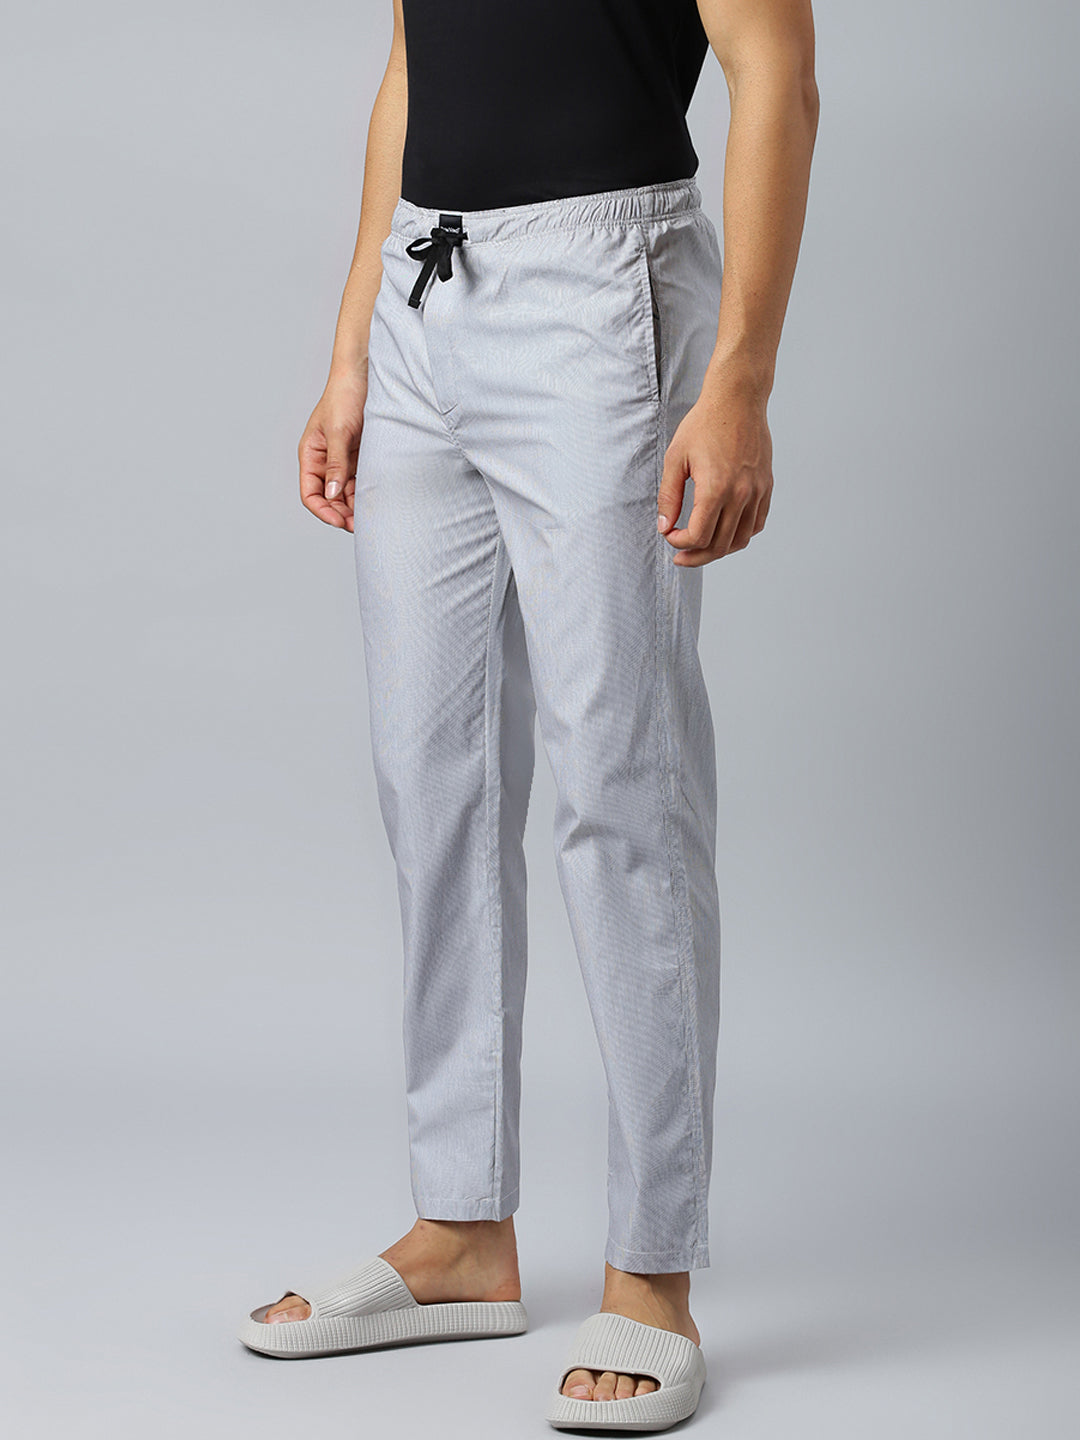 Don Vino Men's White Printed Lounge Pants